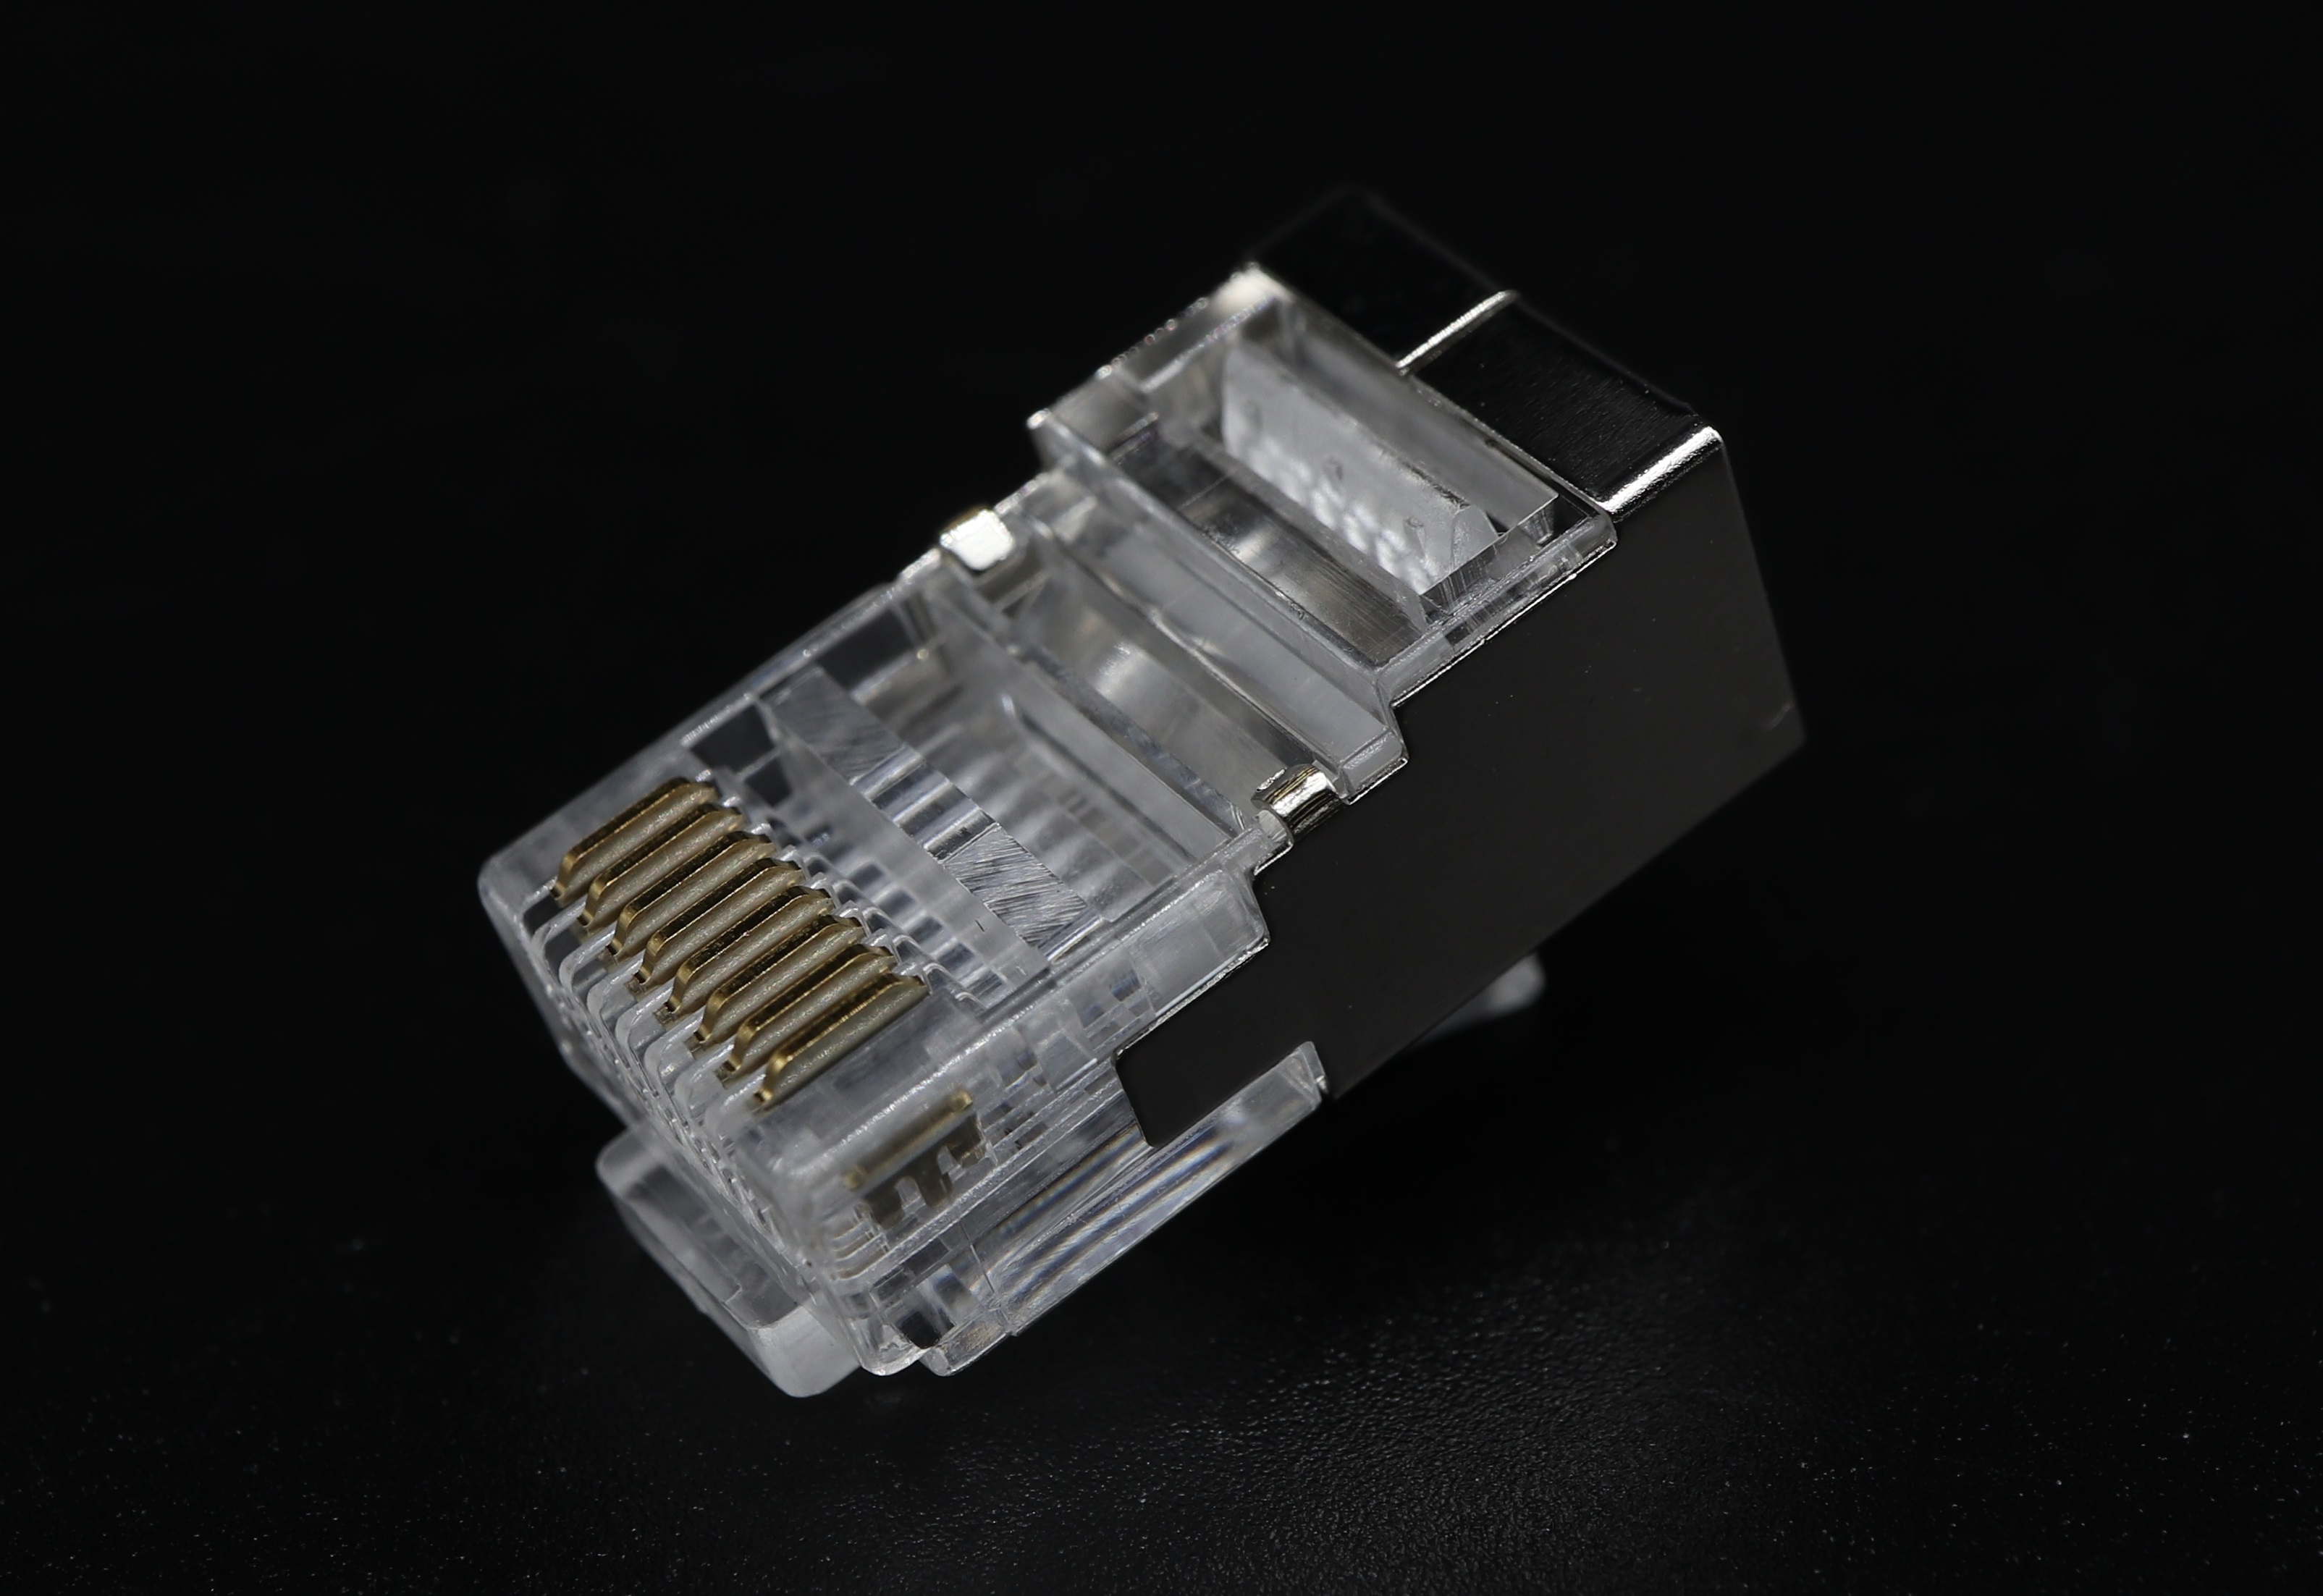 P8-003 - Modular plugs